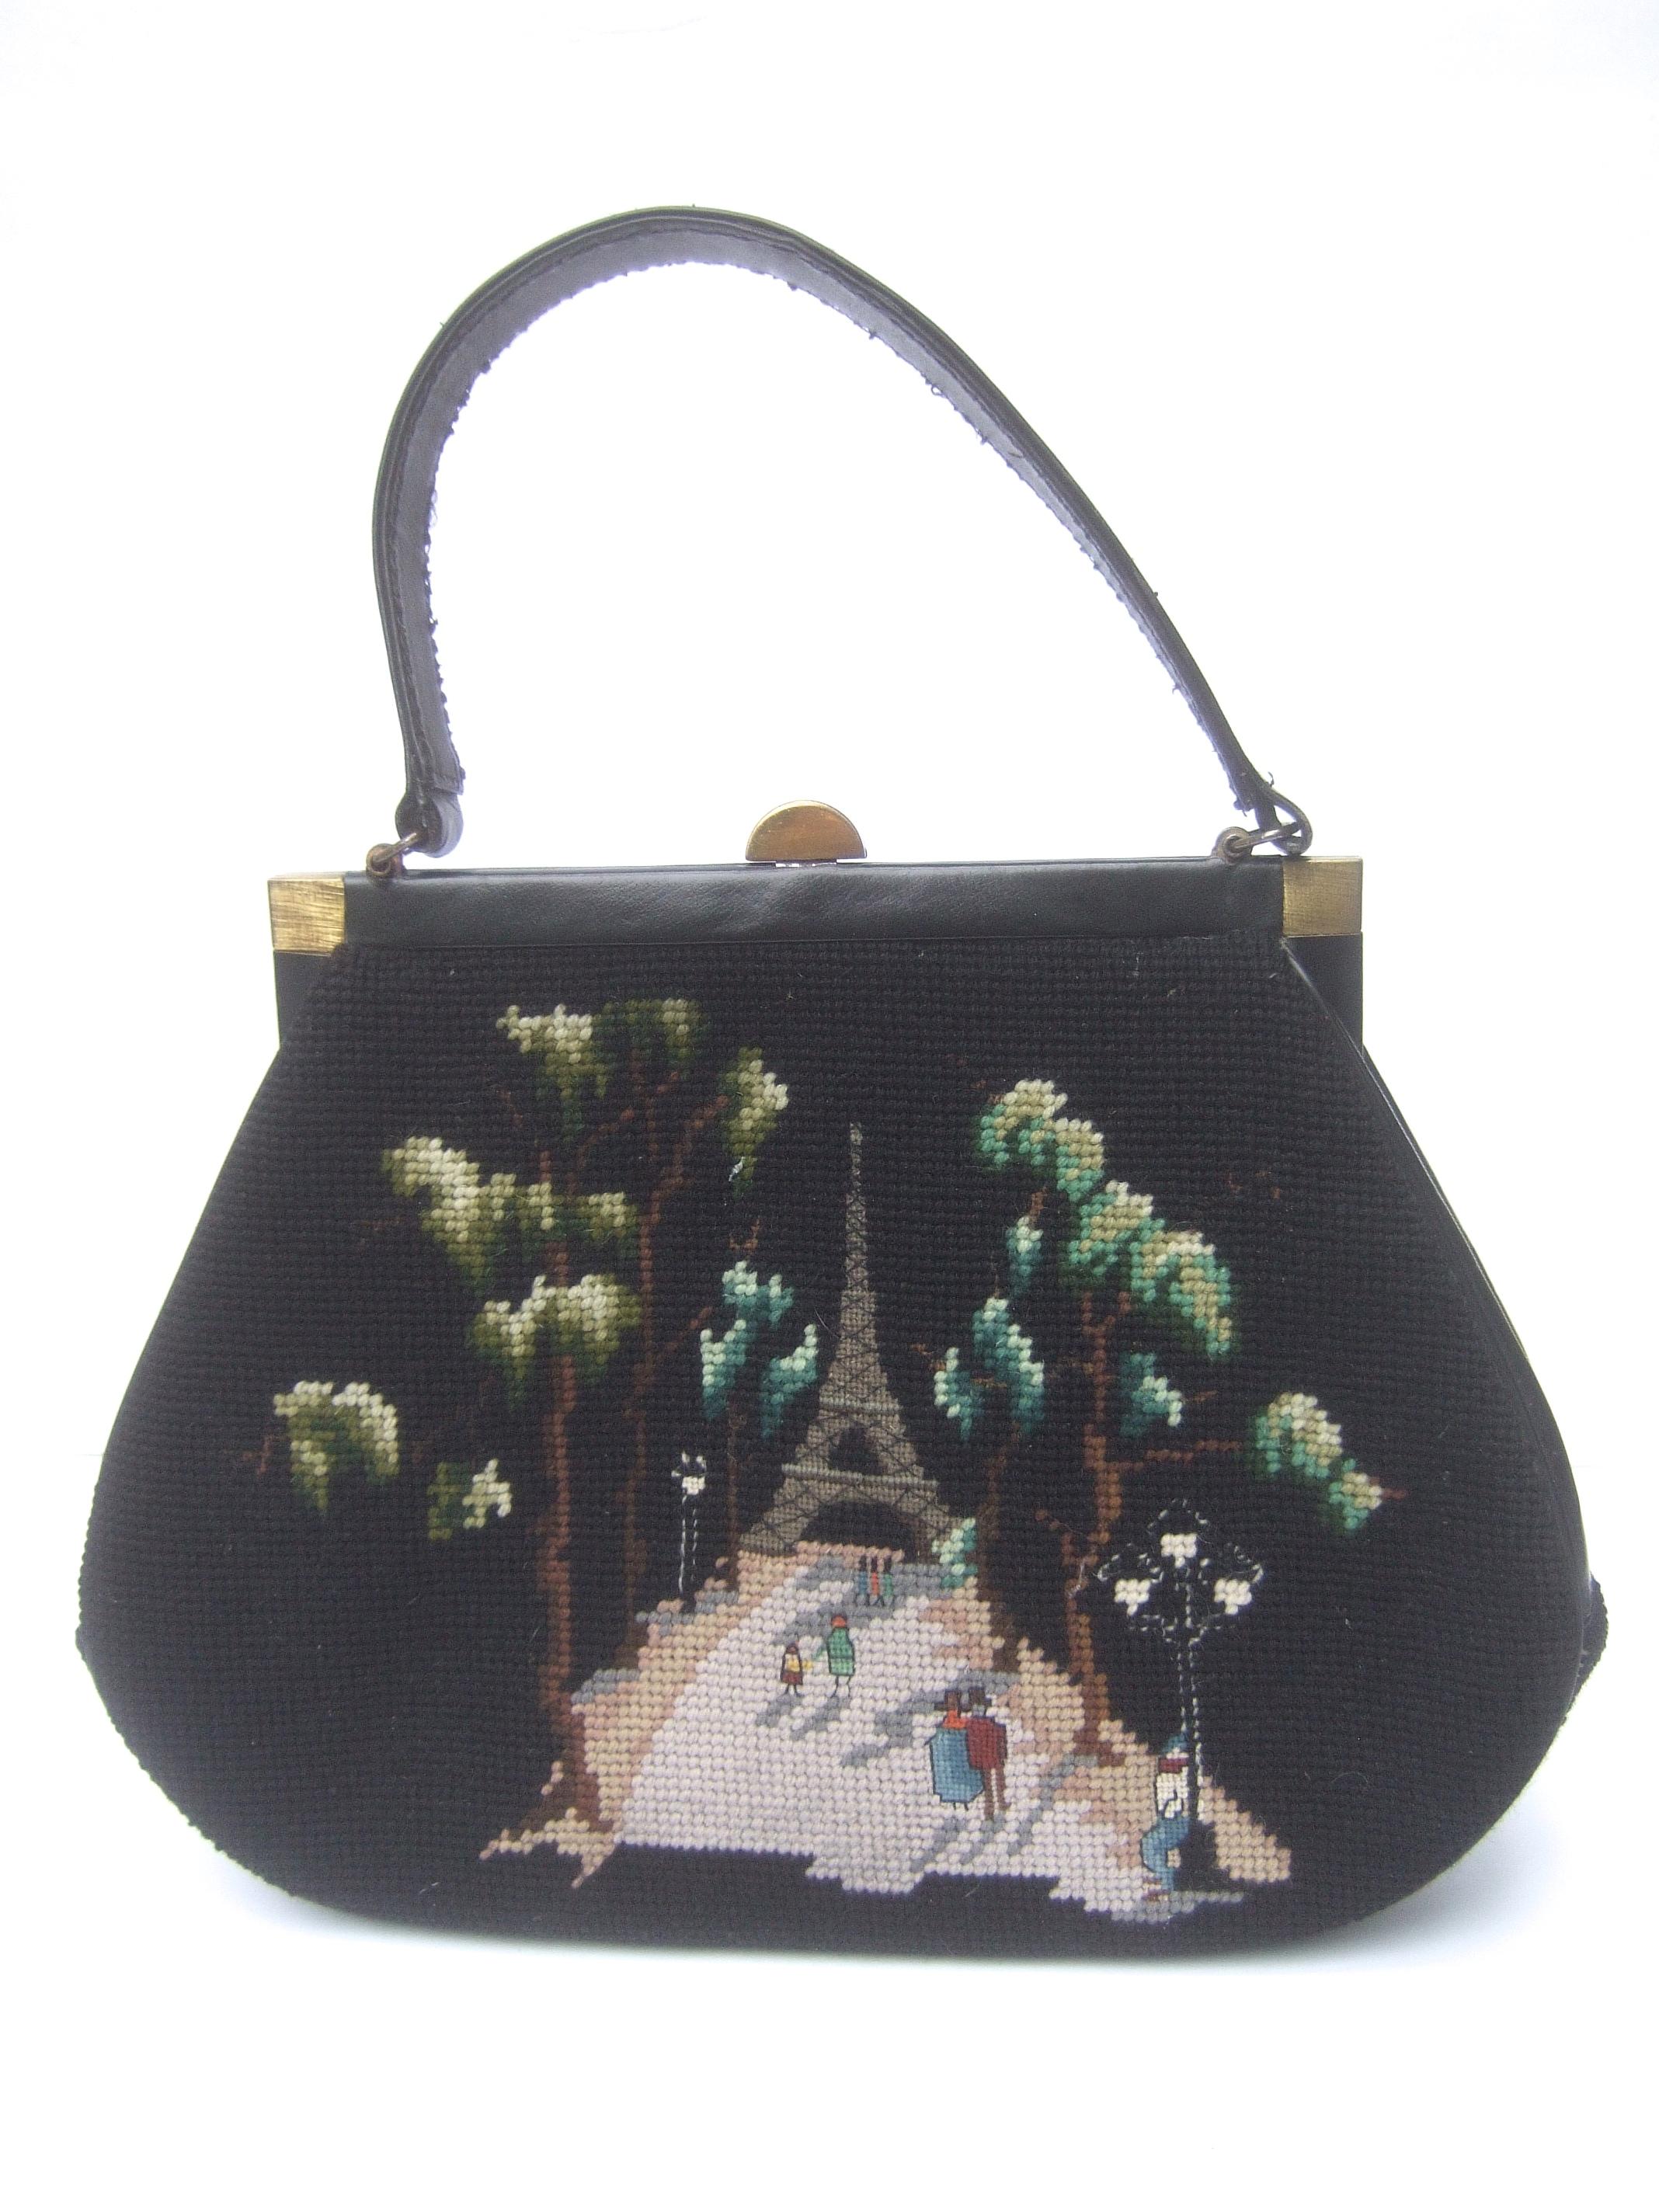 Needlepoint French Scene Artisan Handbag c 1960 6